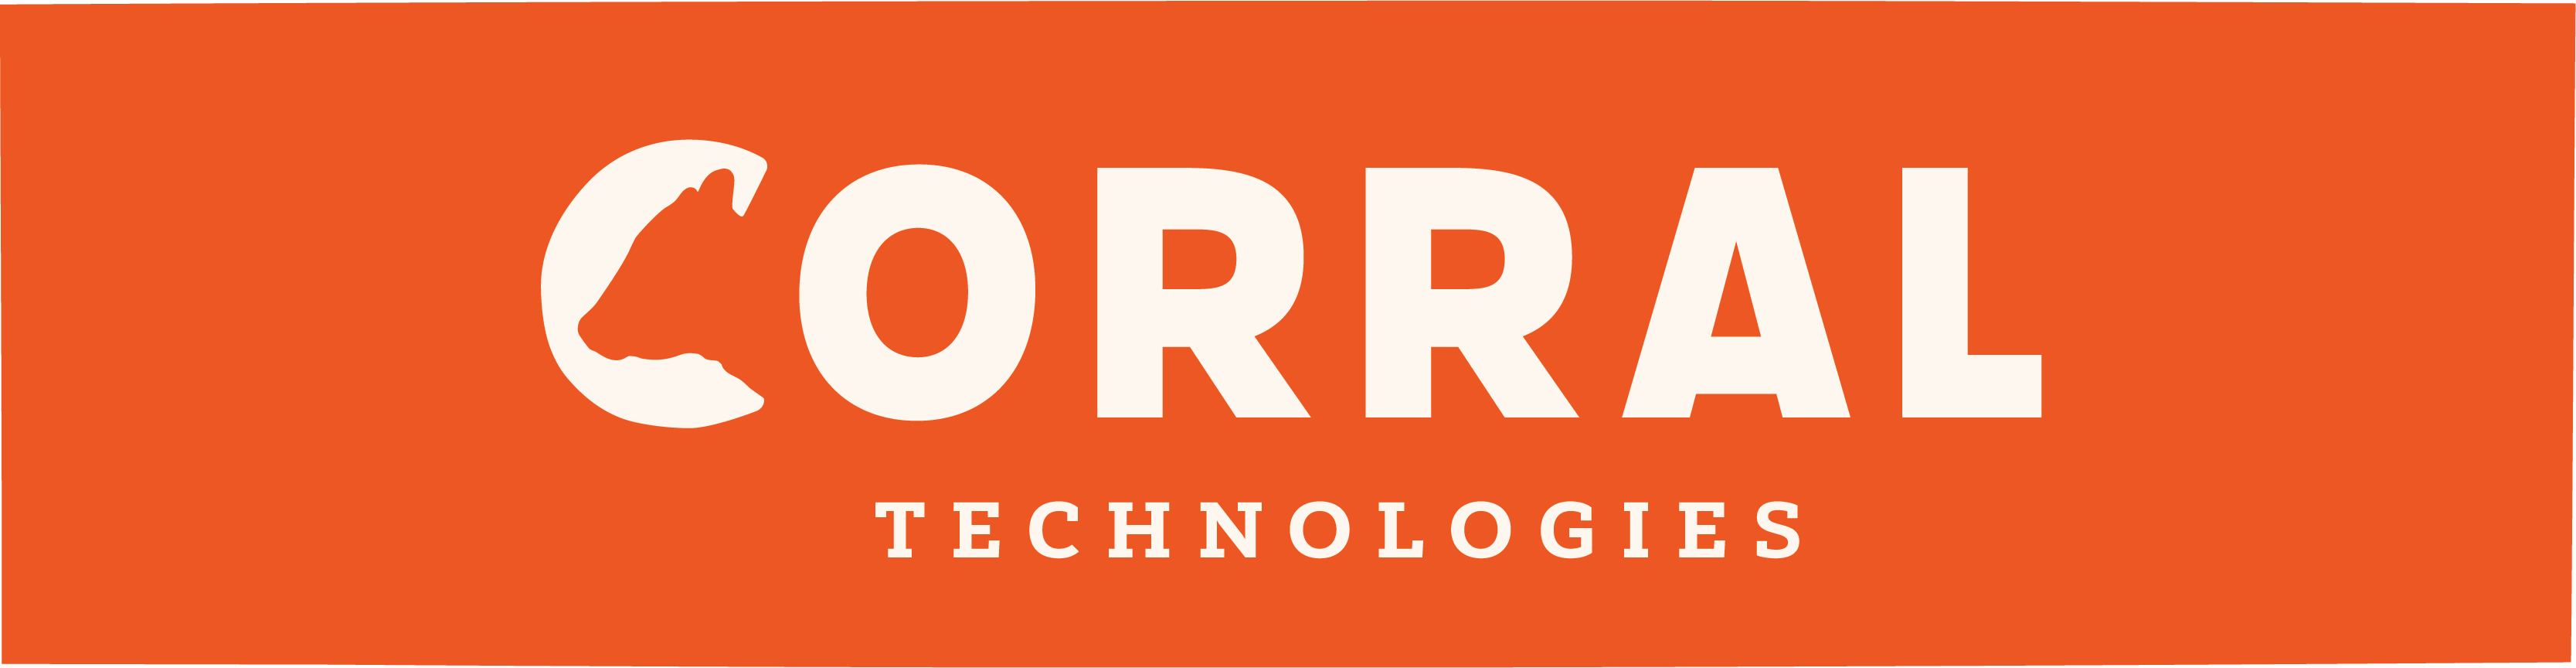 Corral Technologies logo